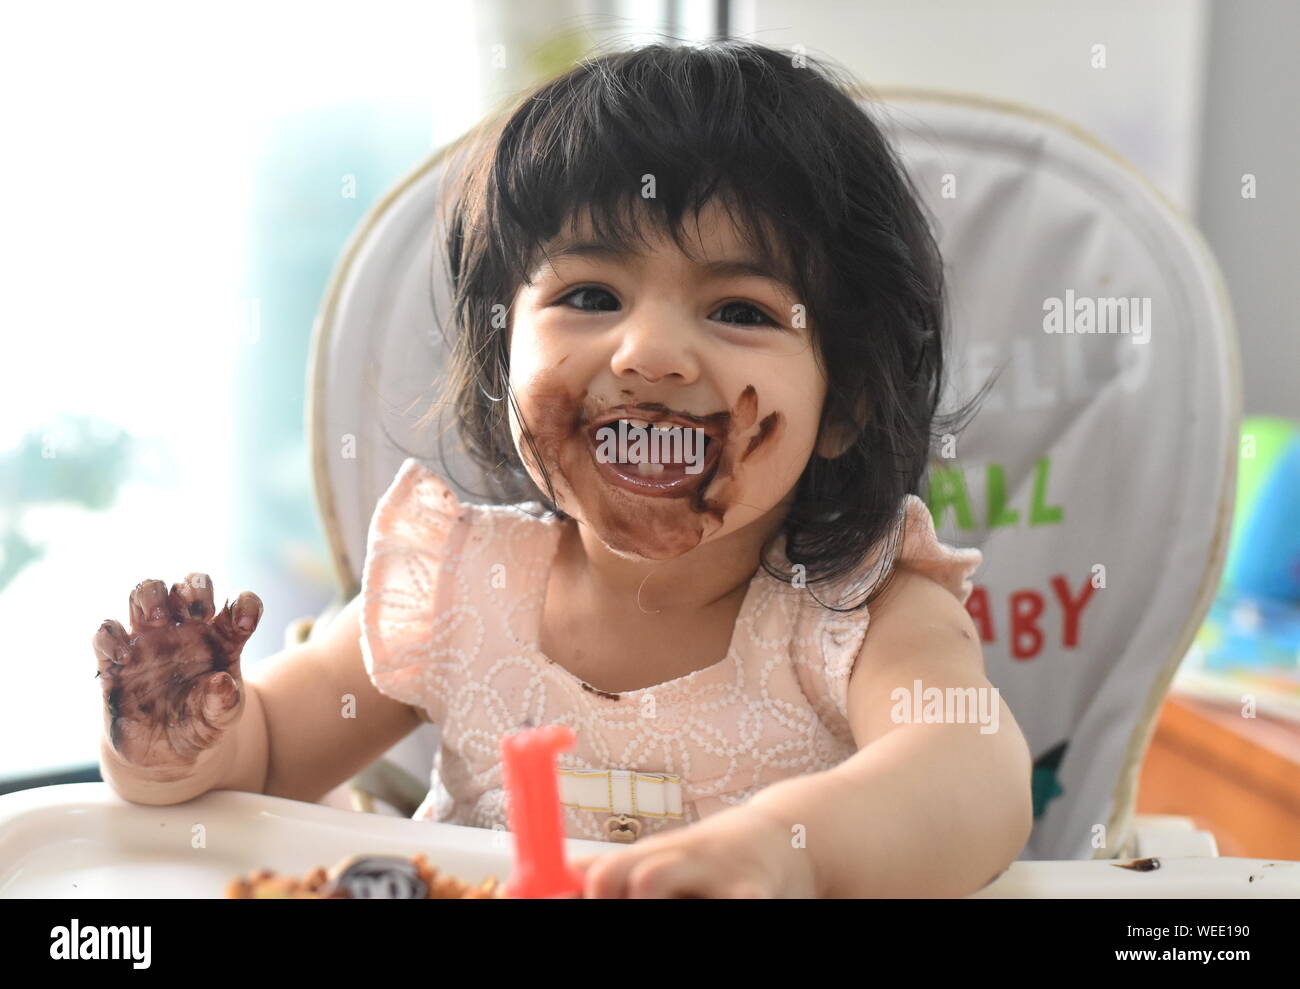 Cute happy baby girl messy eating birthday chocolate cake Stock Photo